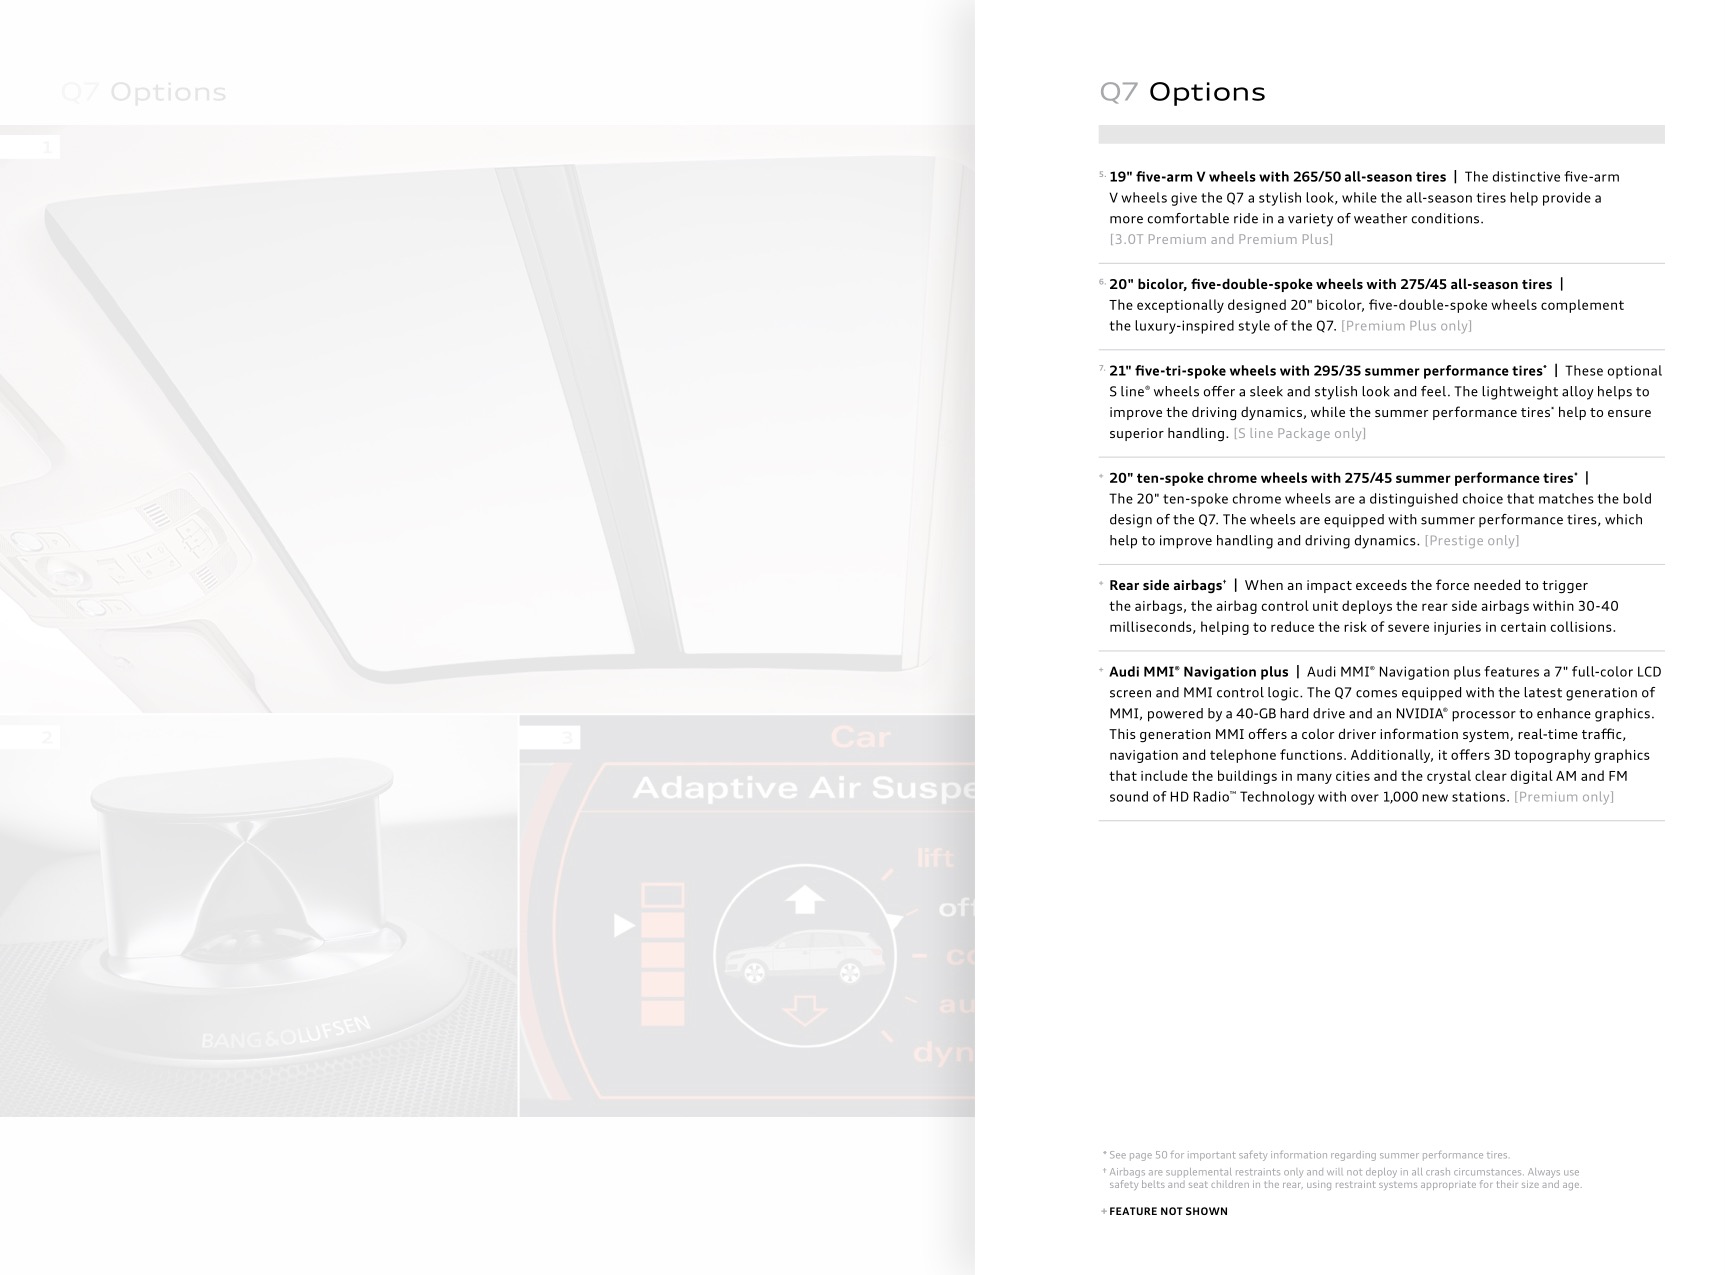 2011 Audi Q7 Brochure Page 20